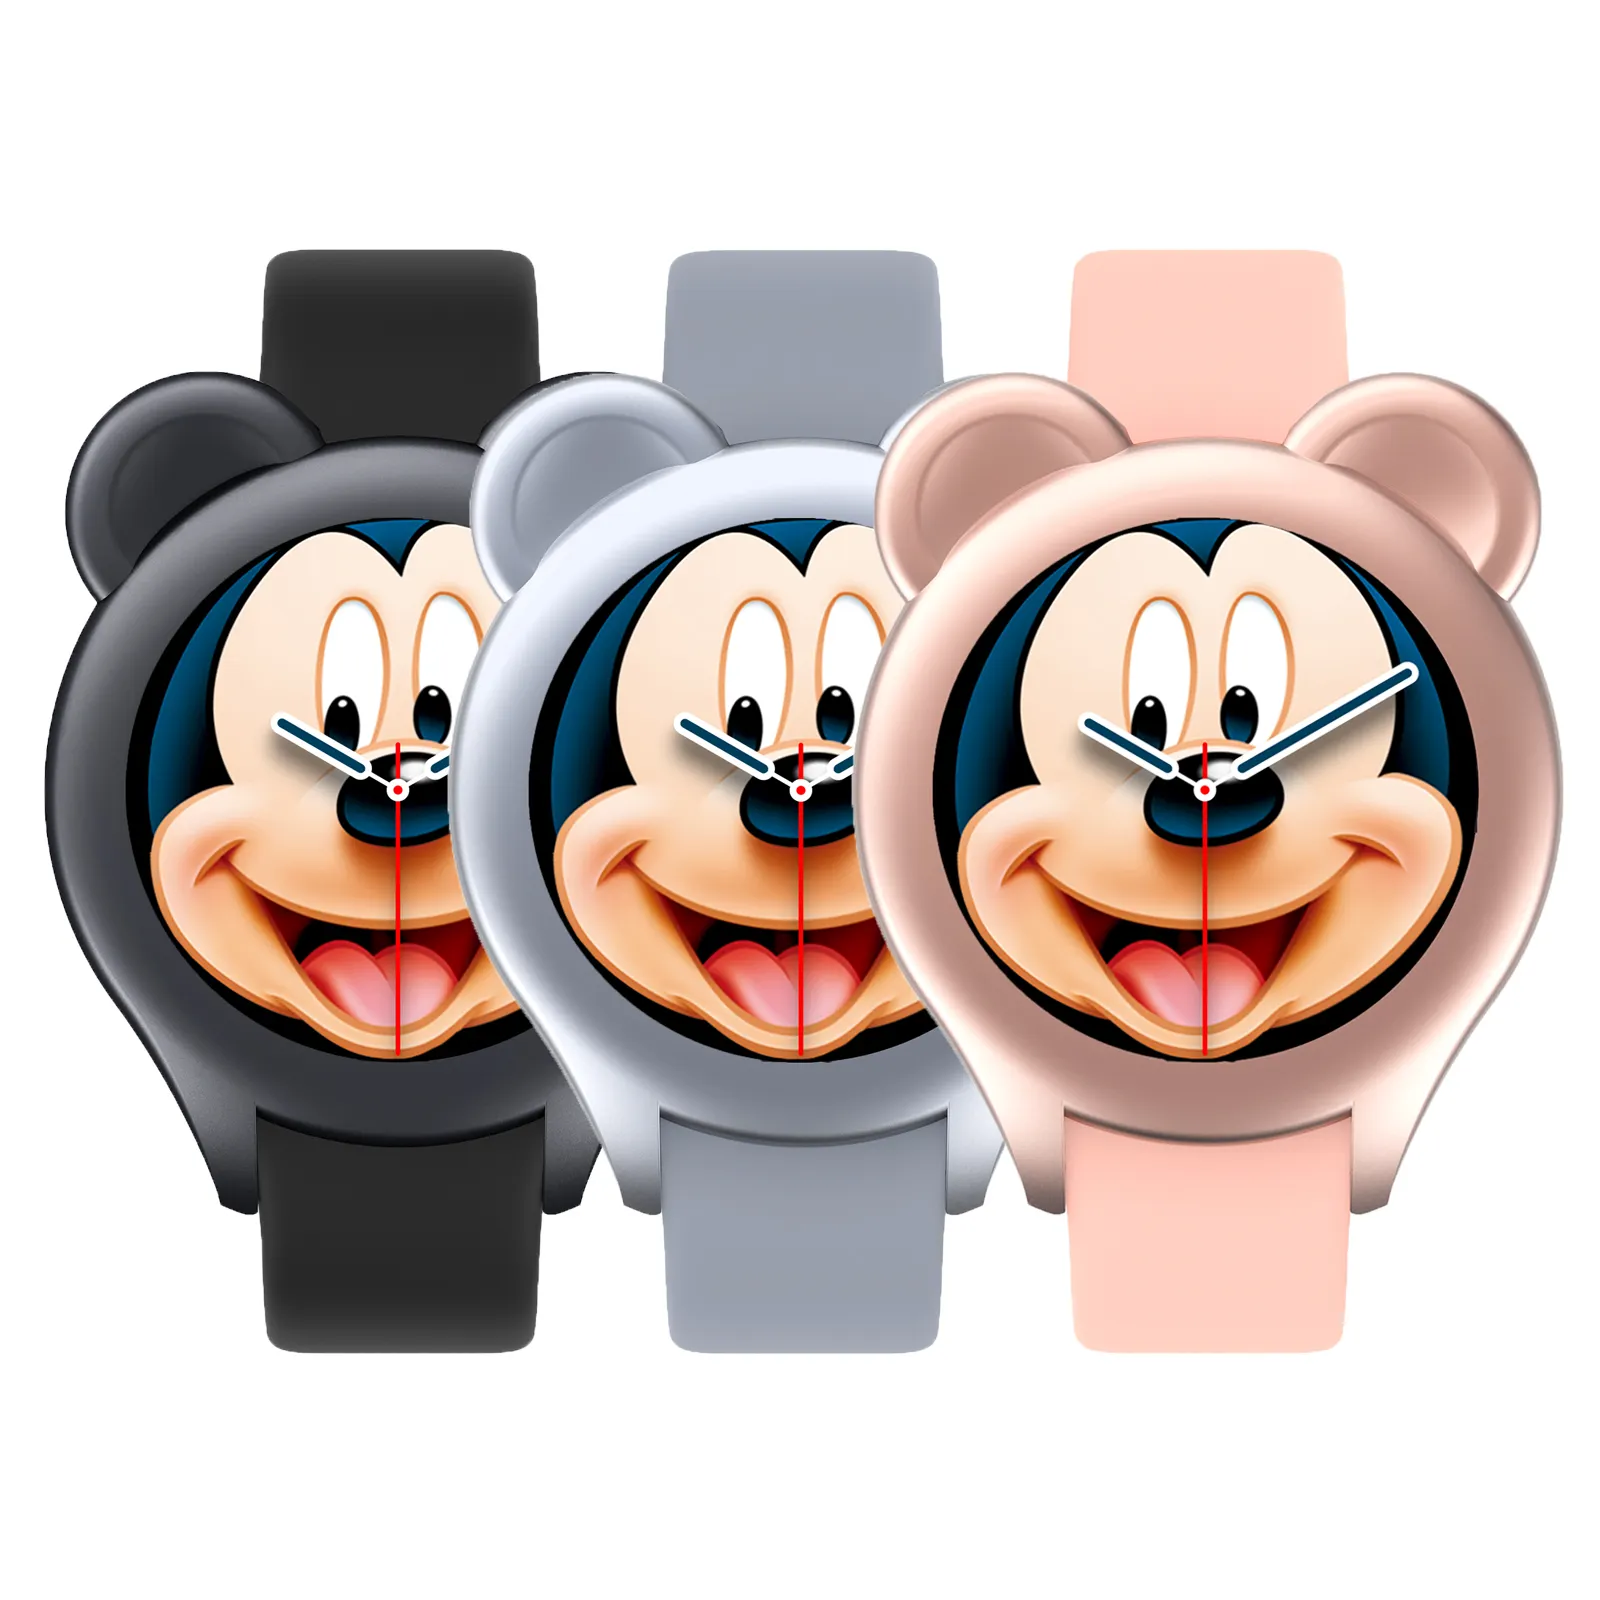 Jam Tangan Pintar Wajah Mickey Imut, Jam Tangan Pintar IP67, Pelacak Kebugaran Olahraga, Android dengan BT Lady, Jam Tangan Pintar